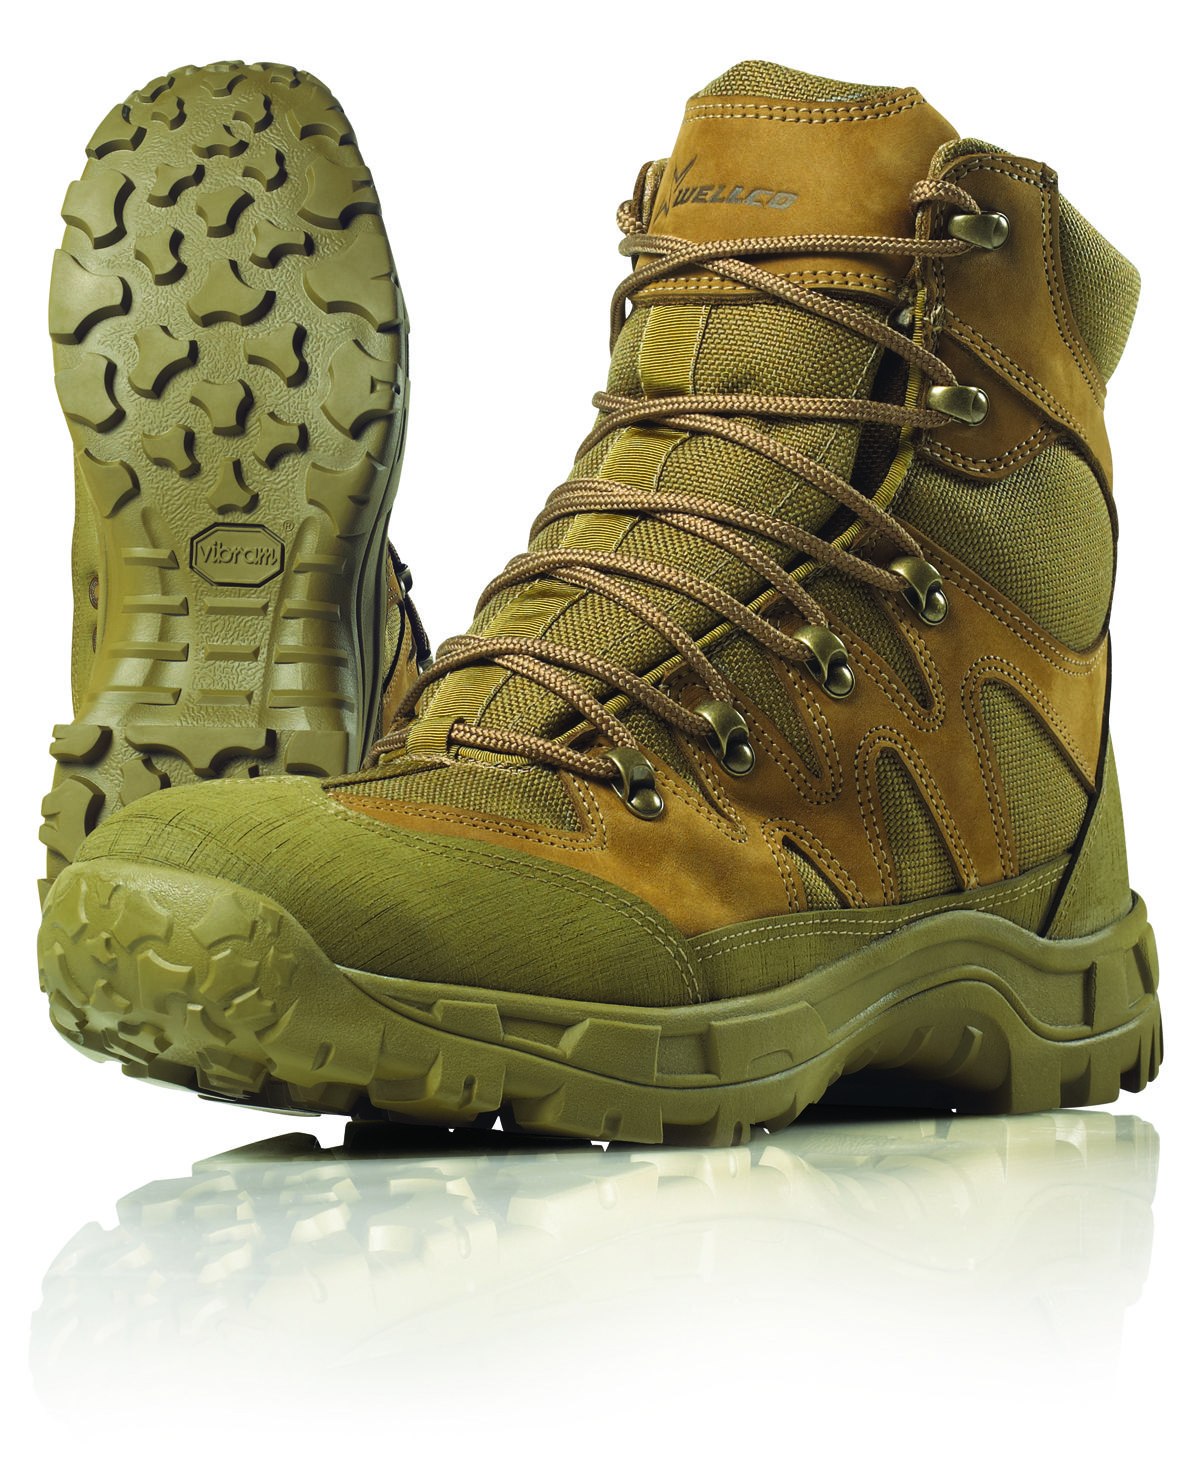 Wellco Combat Boots